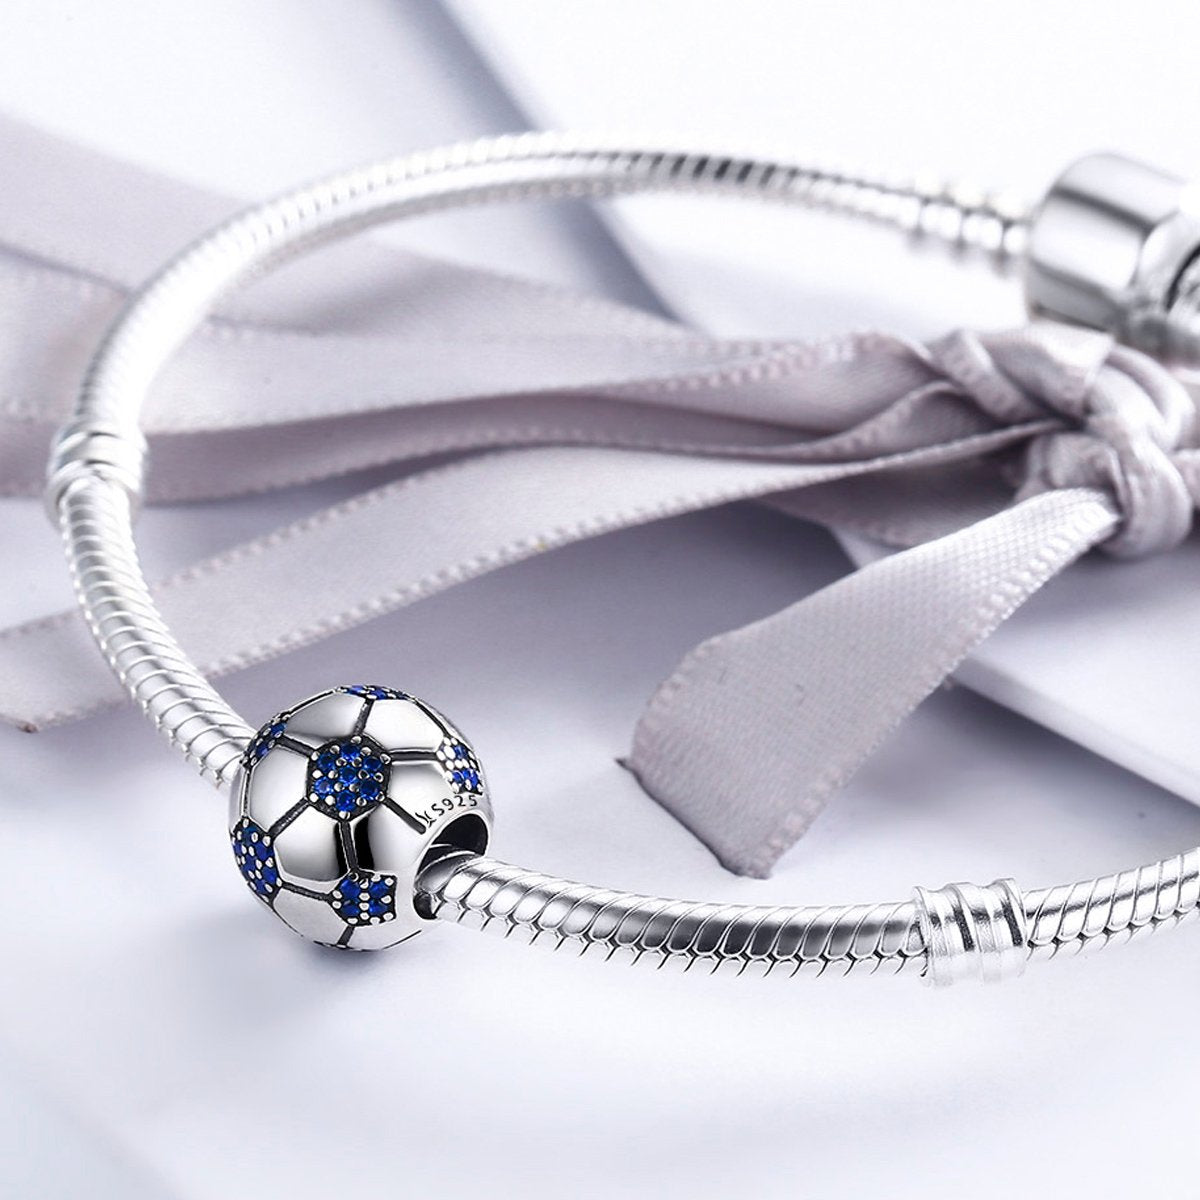 Sterling 925 silver charm the football soccer ball bead pendant fits Pandora charm and European charm bracelet Xaxe.com